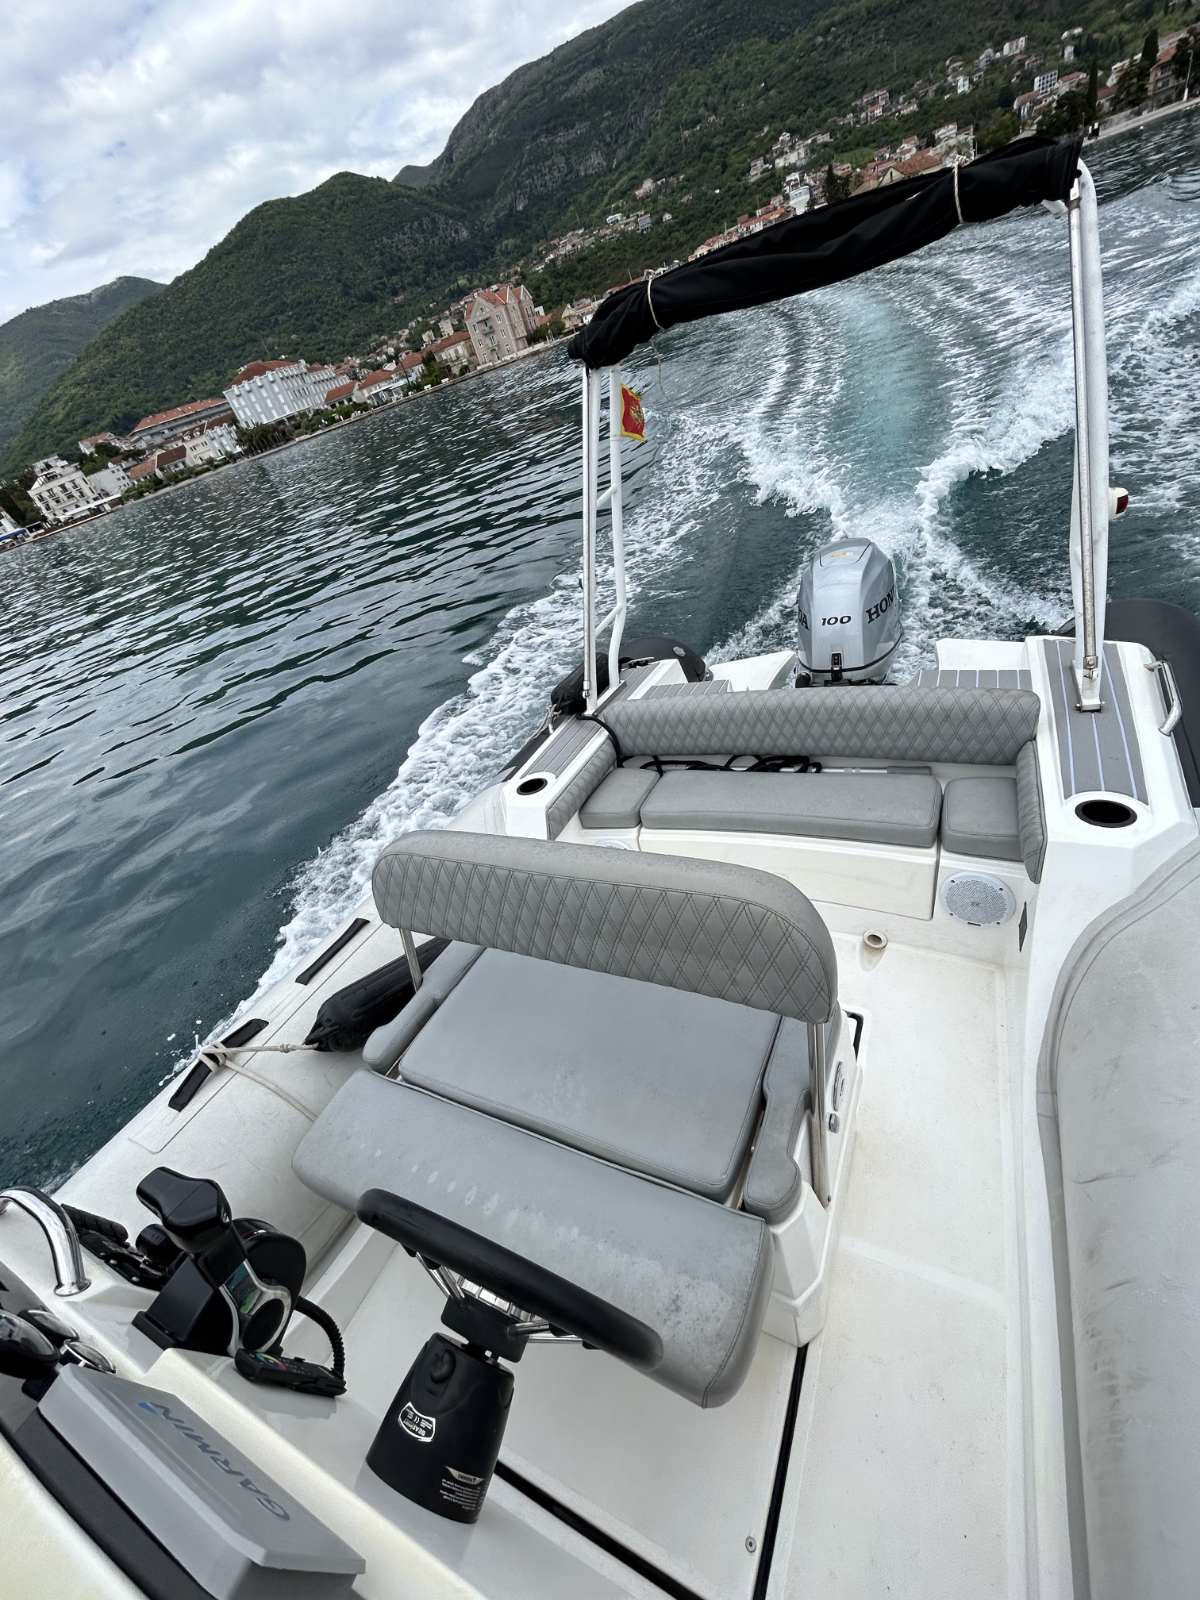 Tiger Topline 600 - Motor Boat Charter Montenegro & Boat hire in Montenegro Bay of Kotor Tivat Porto Montenegro 5